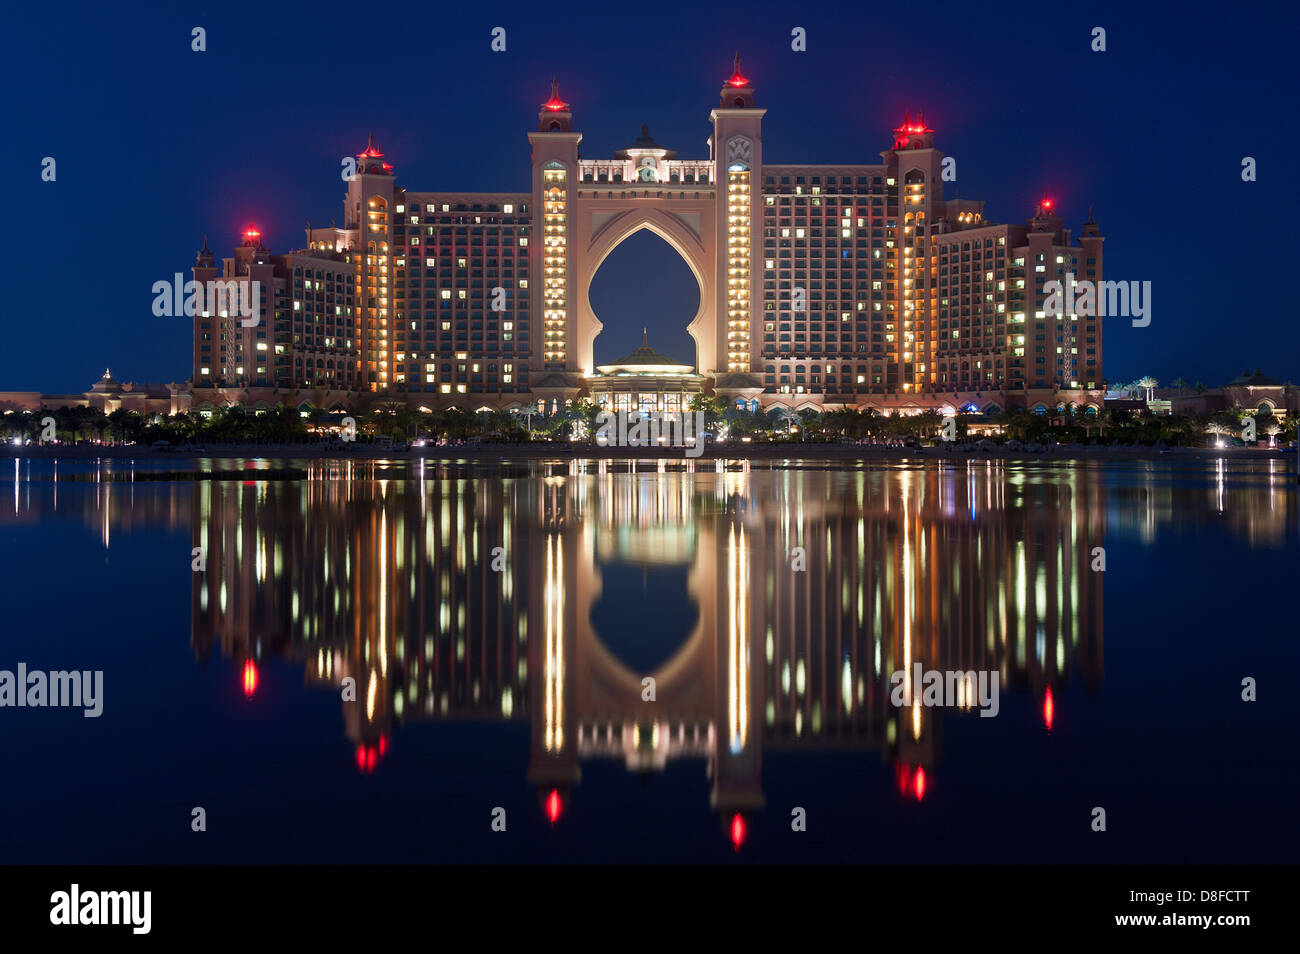 Atlantis Hotel on The Palm Jumeirah, UAE Stock Photo